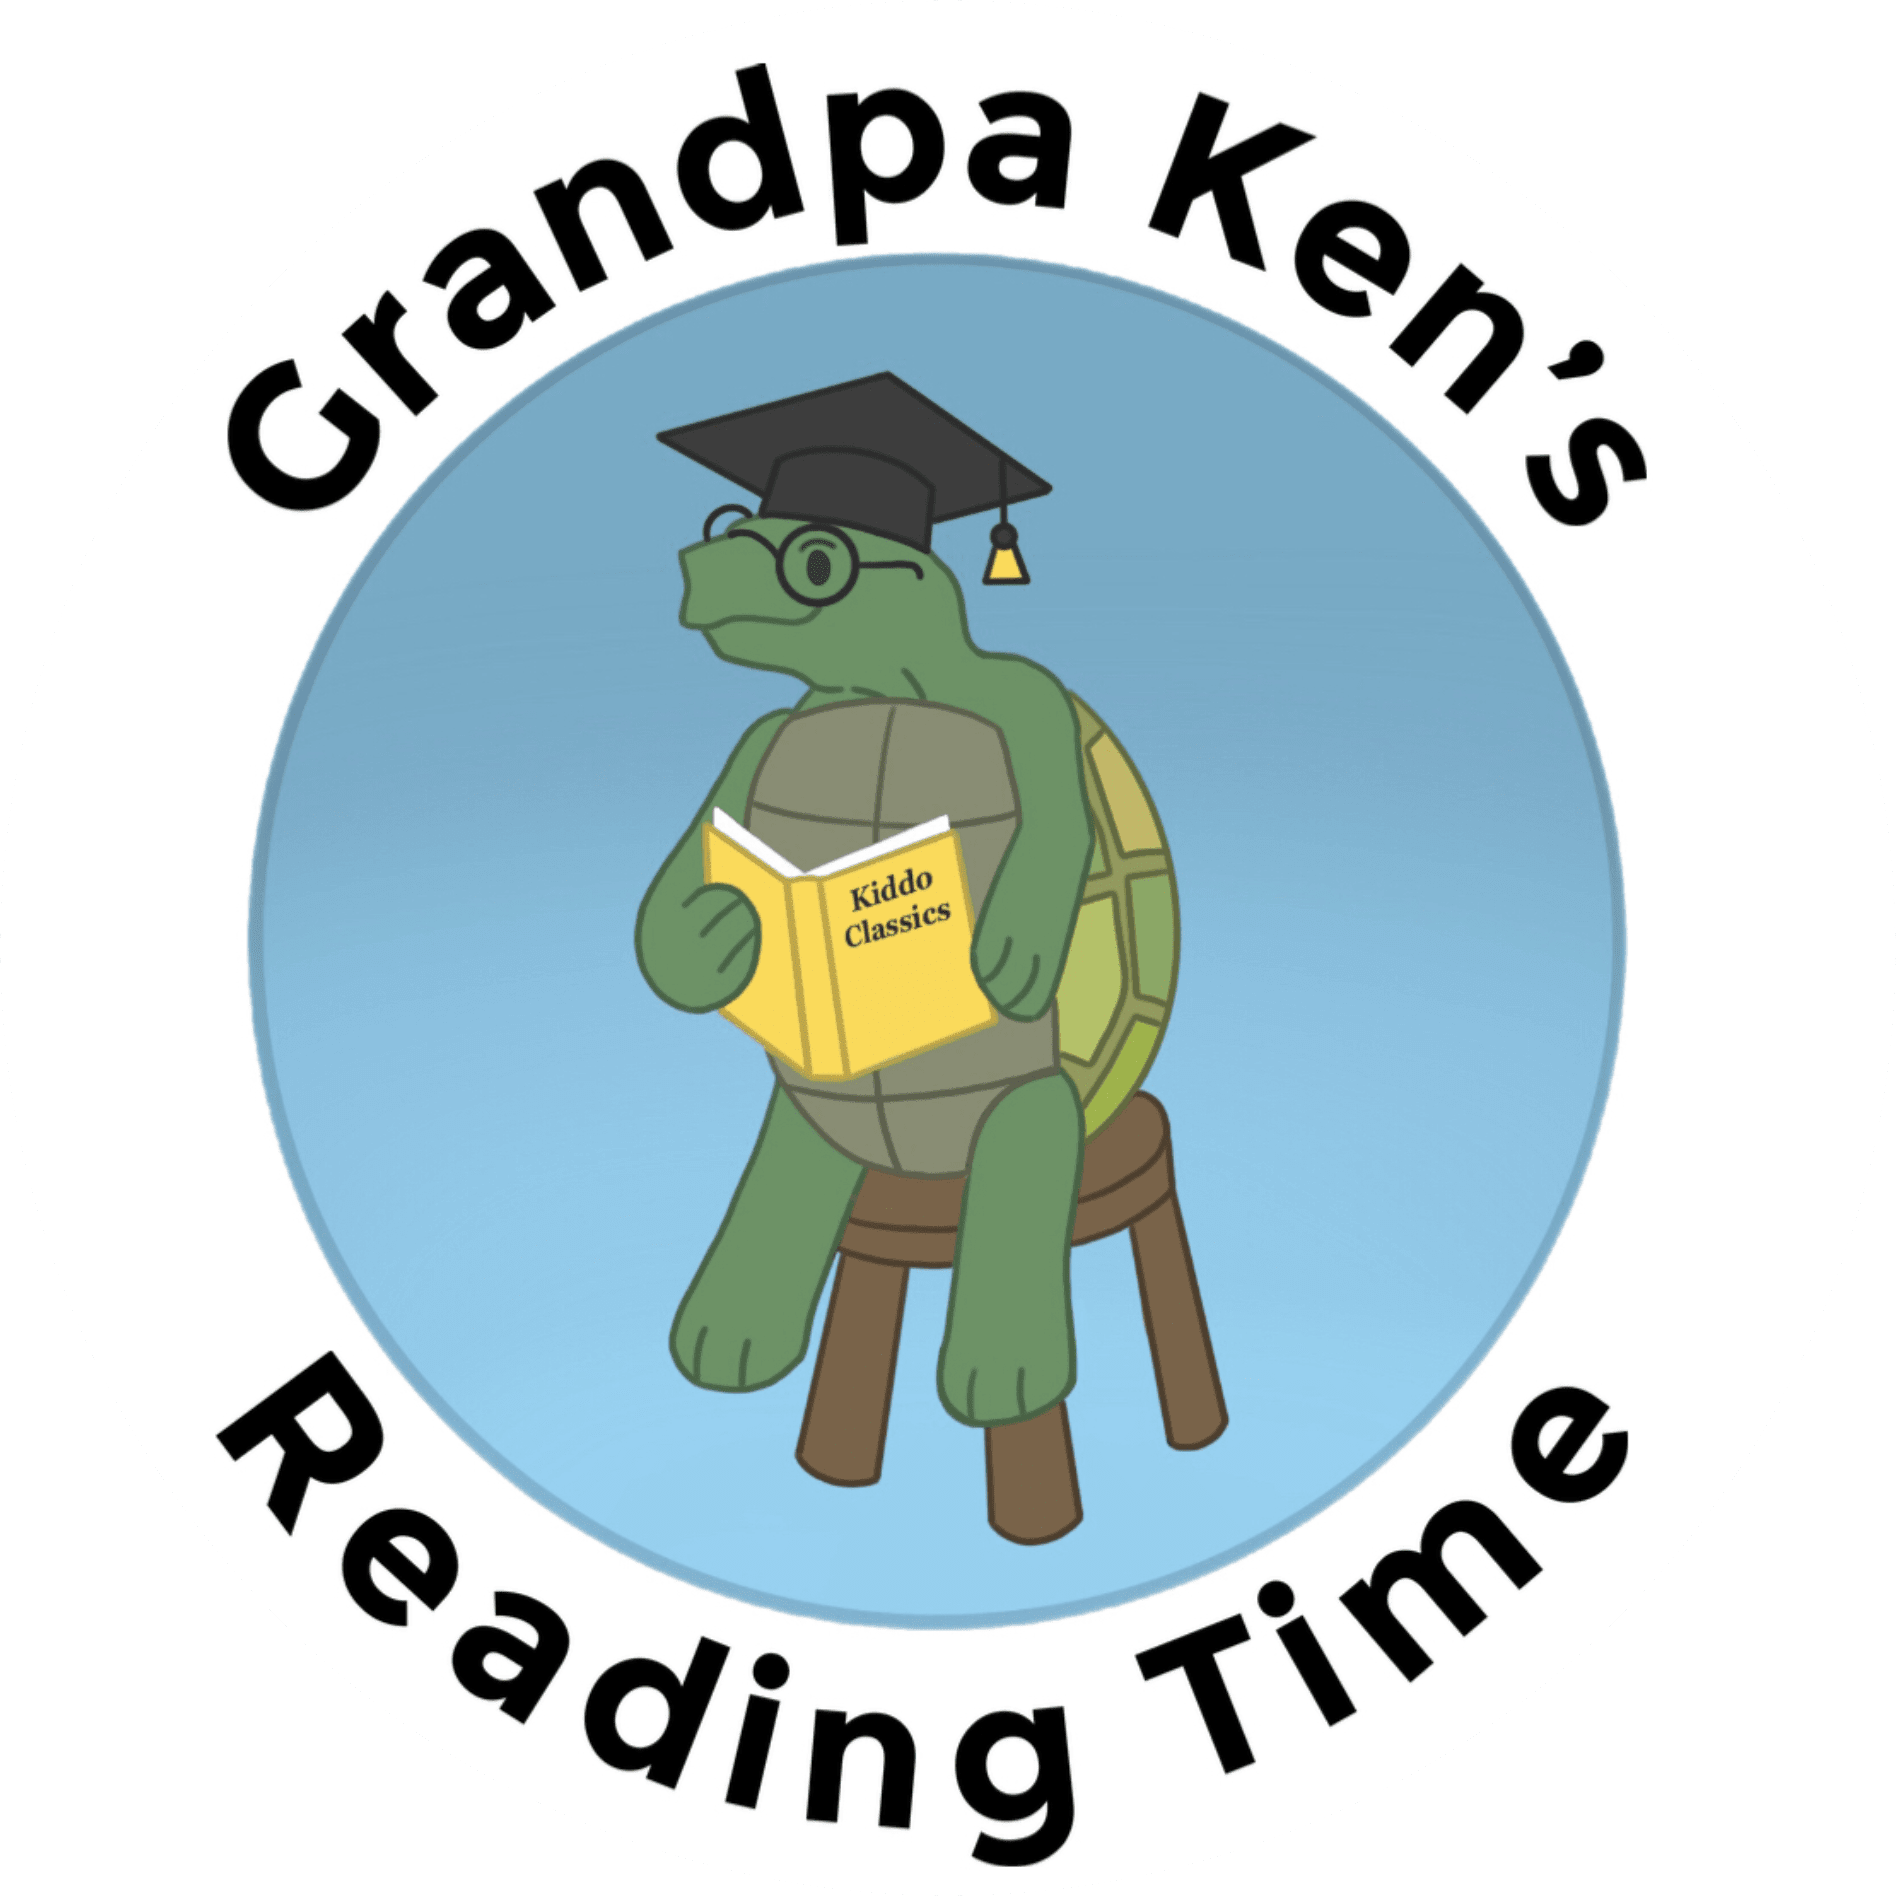 Grandpa Ken's Reading Time